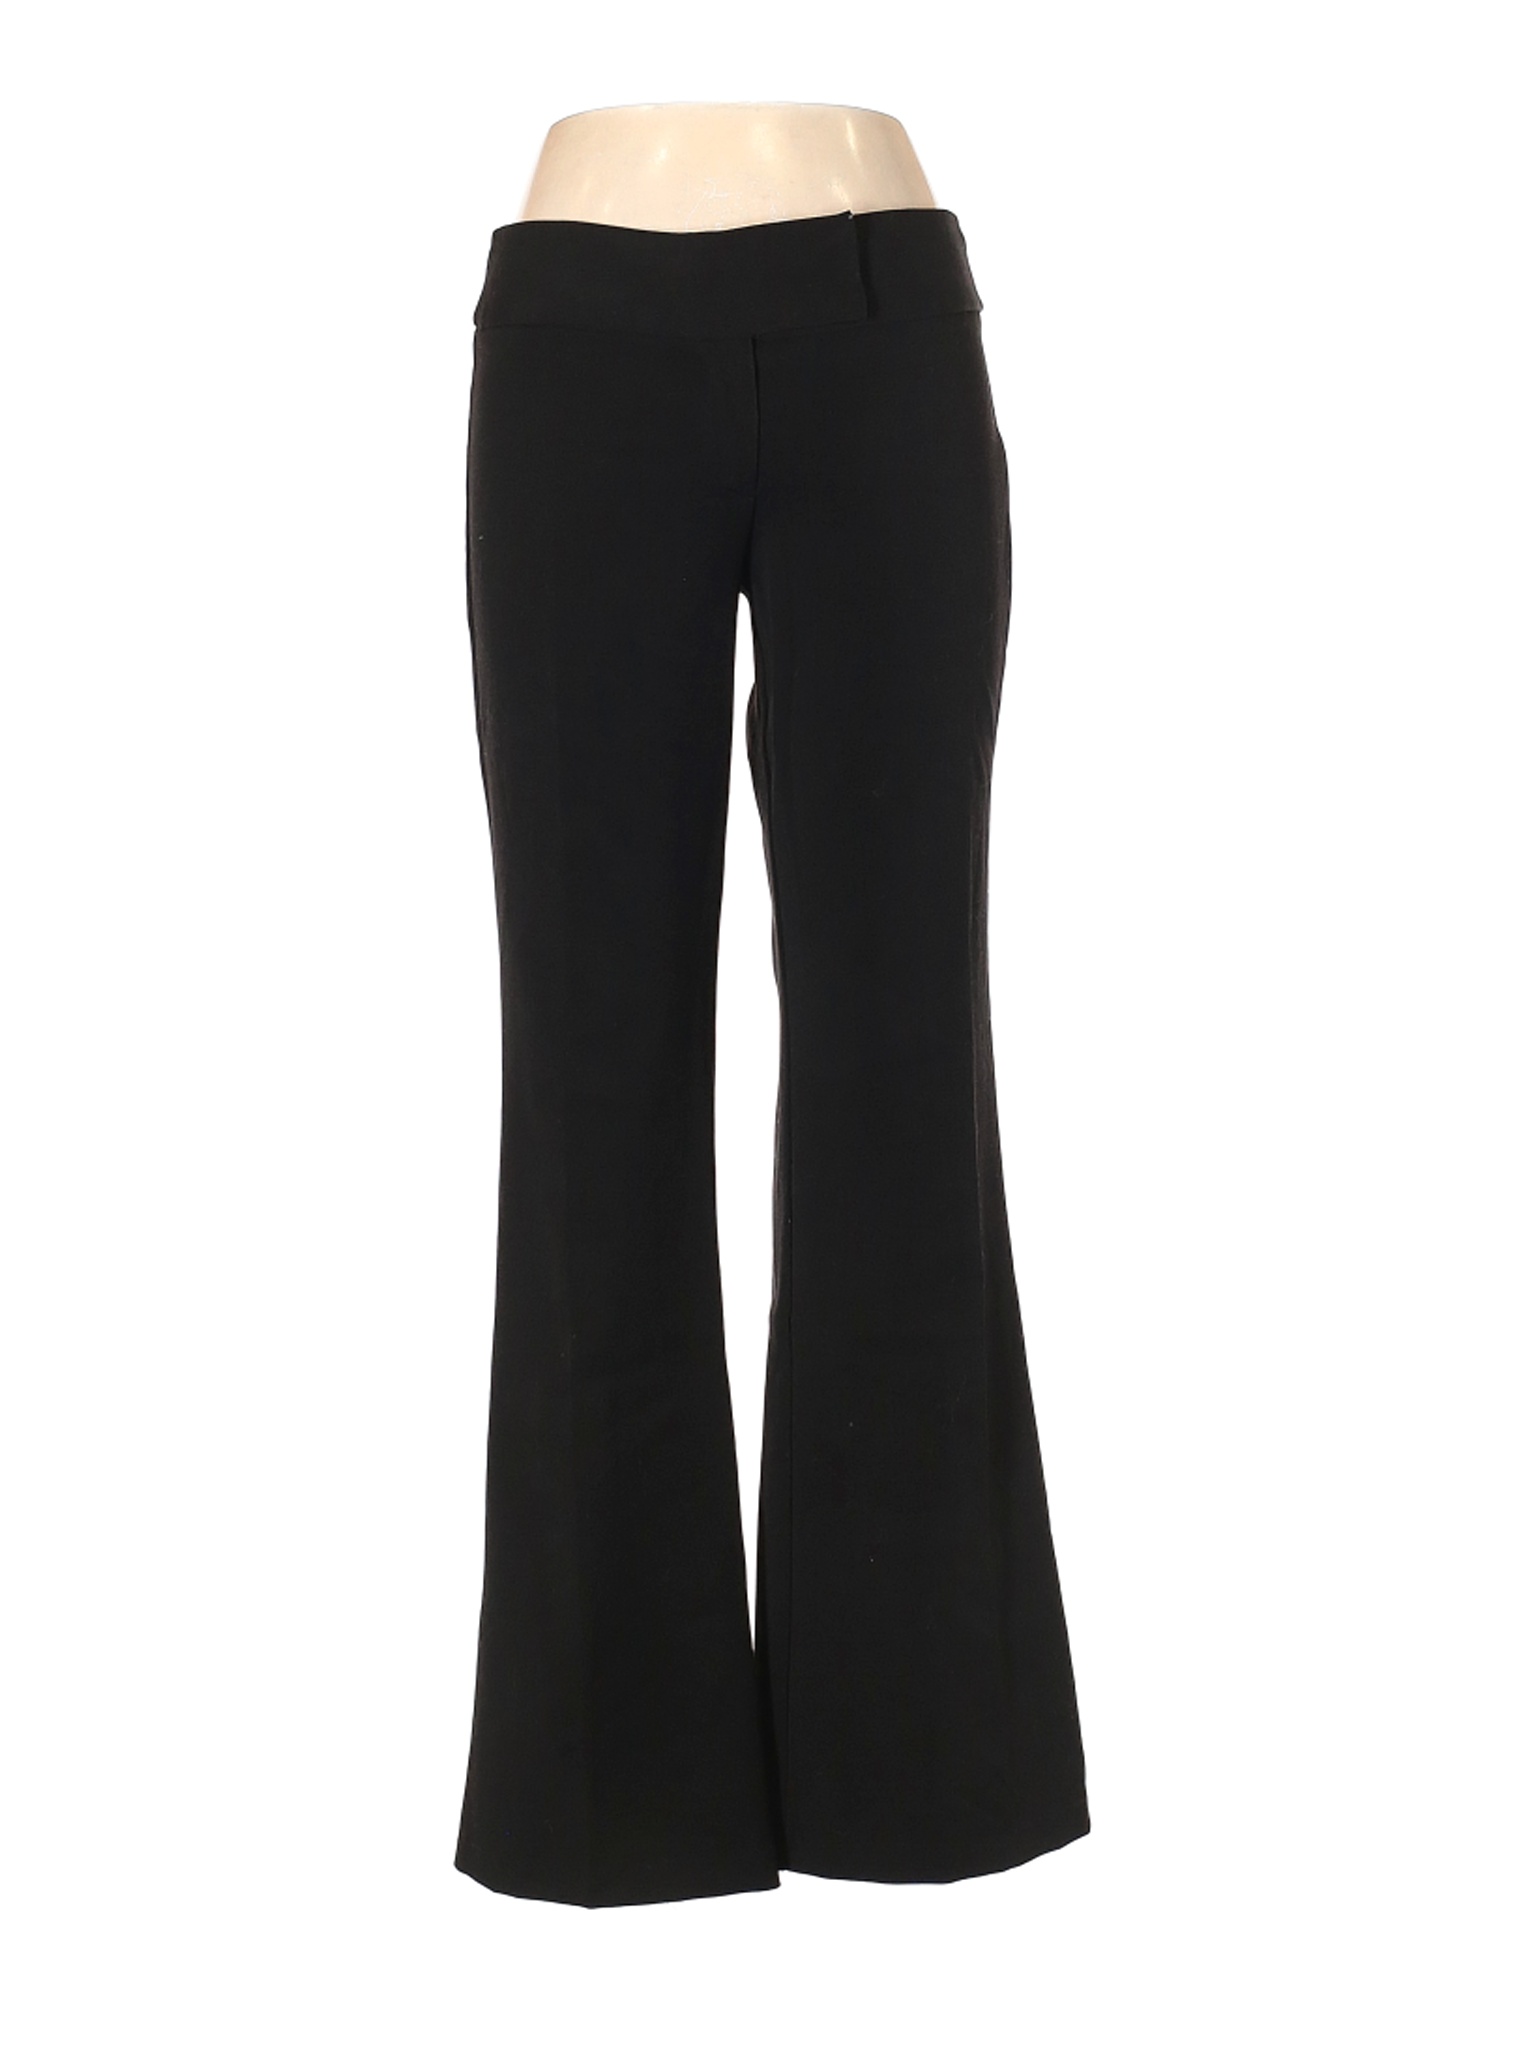 Tracy Evans Limited Women Black Dress Pants 11 | eBay